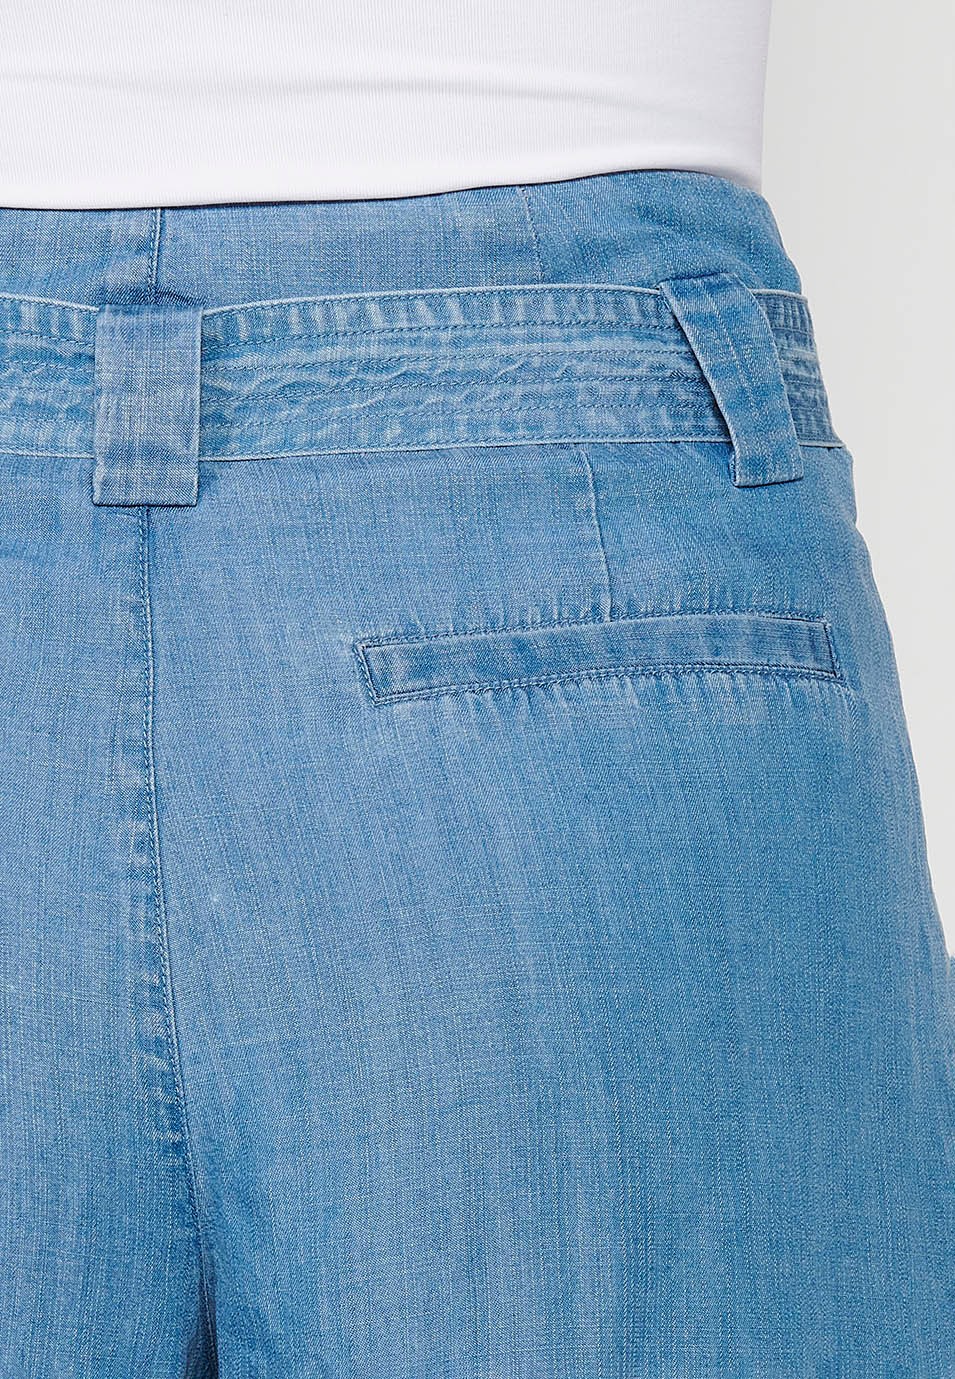 Pantalón short, cintura ajustable con cinta, color azul para mujer